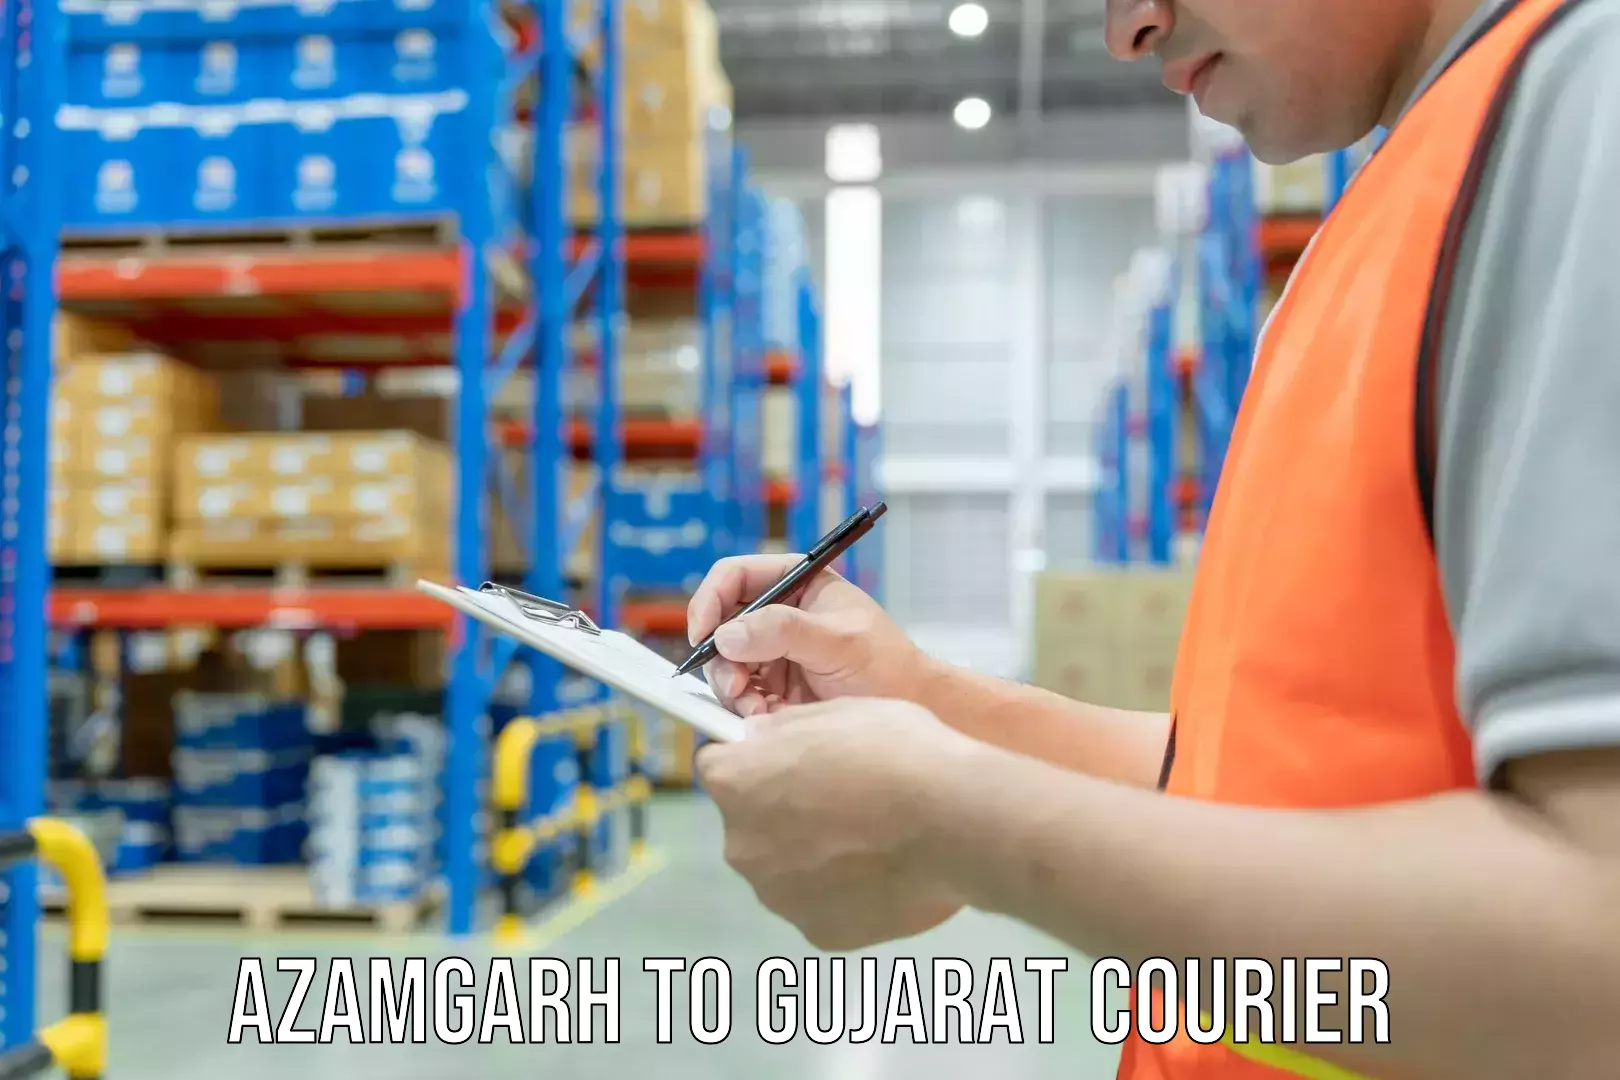 Courier service innovation Azamgarh to Gujarat